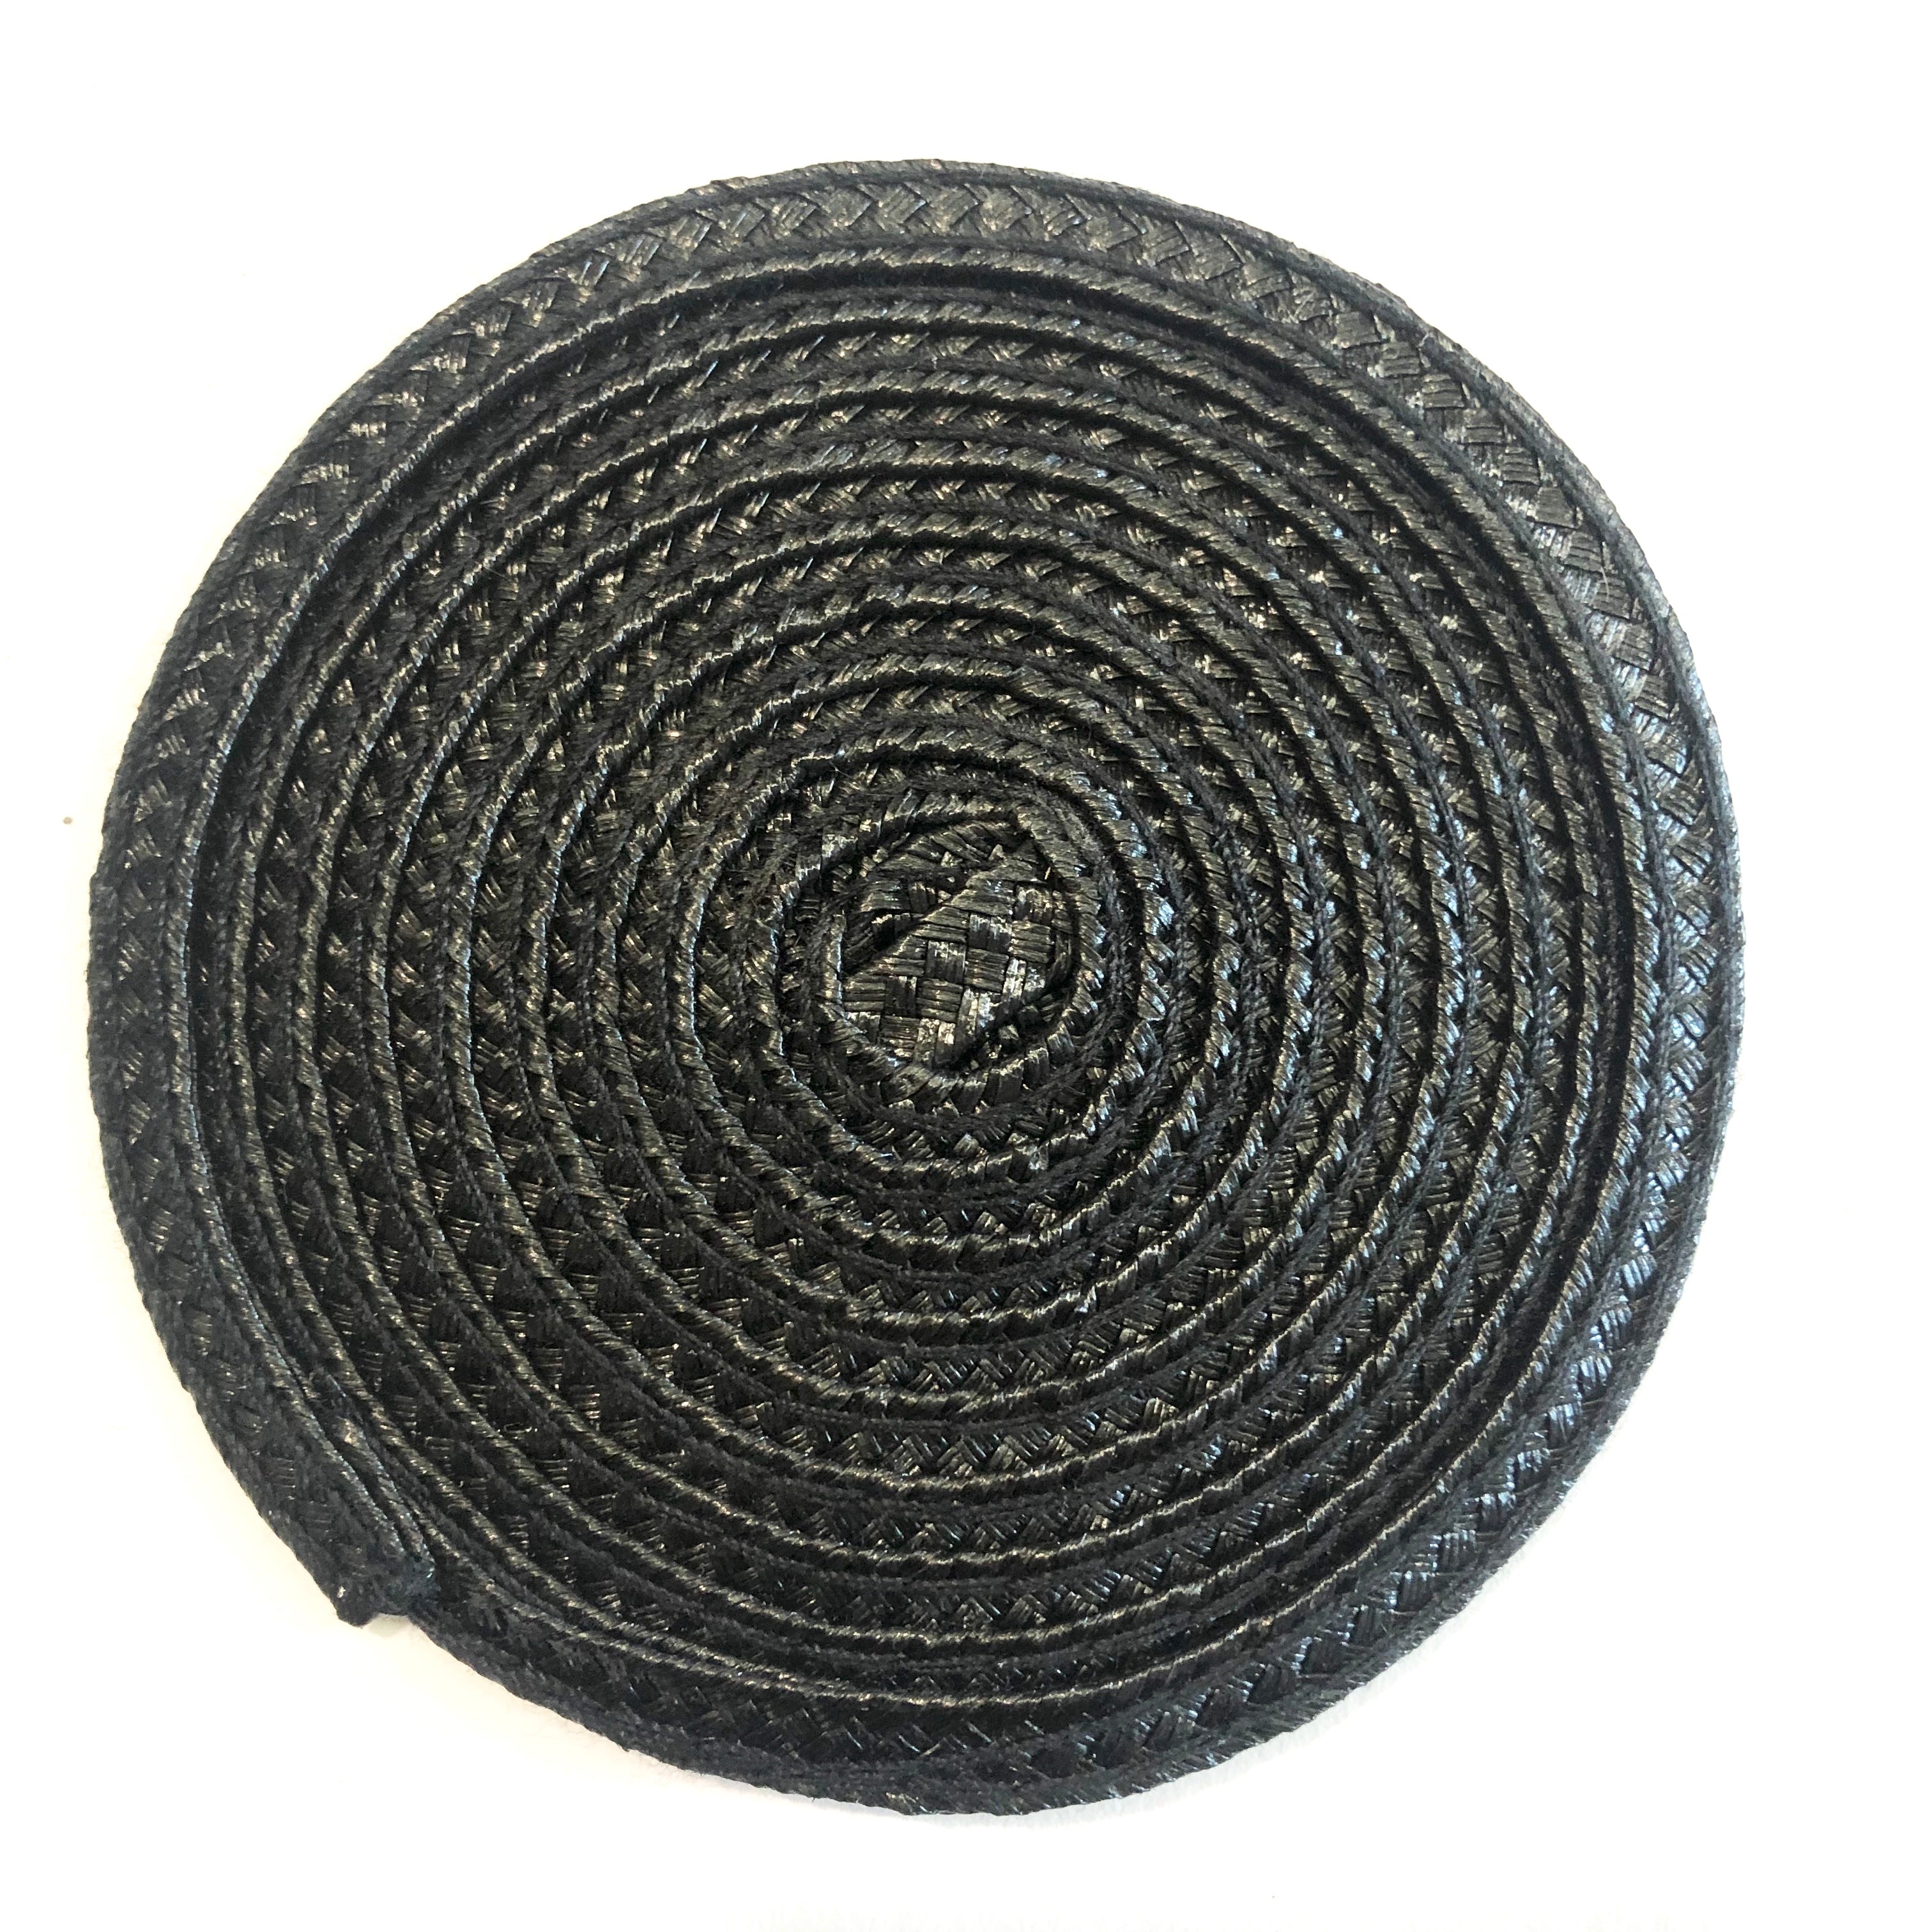 Polybraid 100mm Round Disc Millinery Fascinator Base - Black